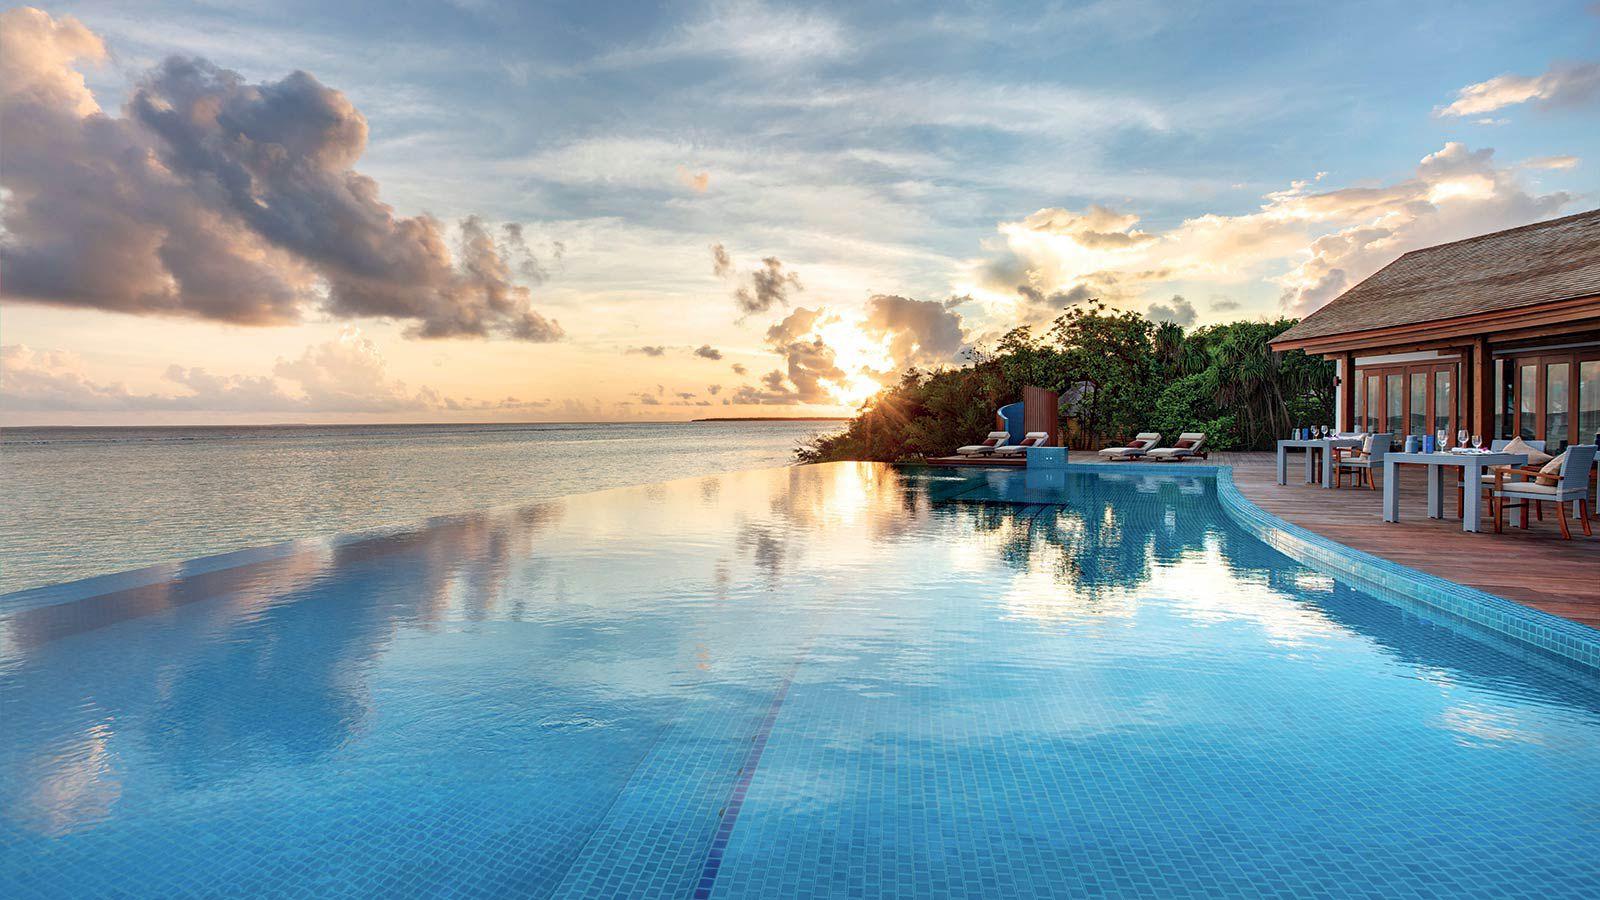 Hideaway Beach Resort Boasts 2 Infinity Pools in the Maldives